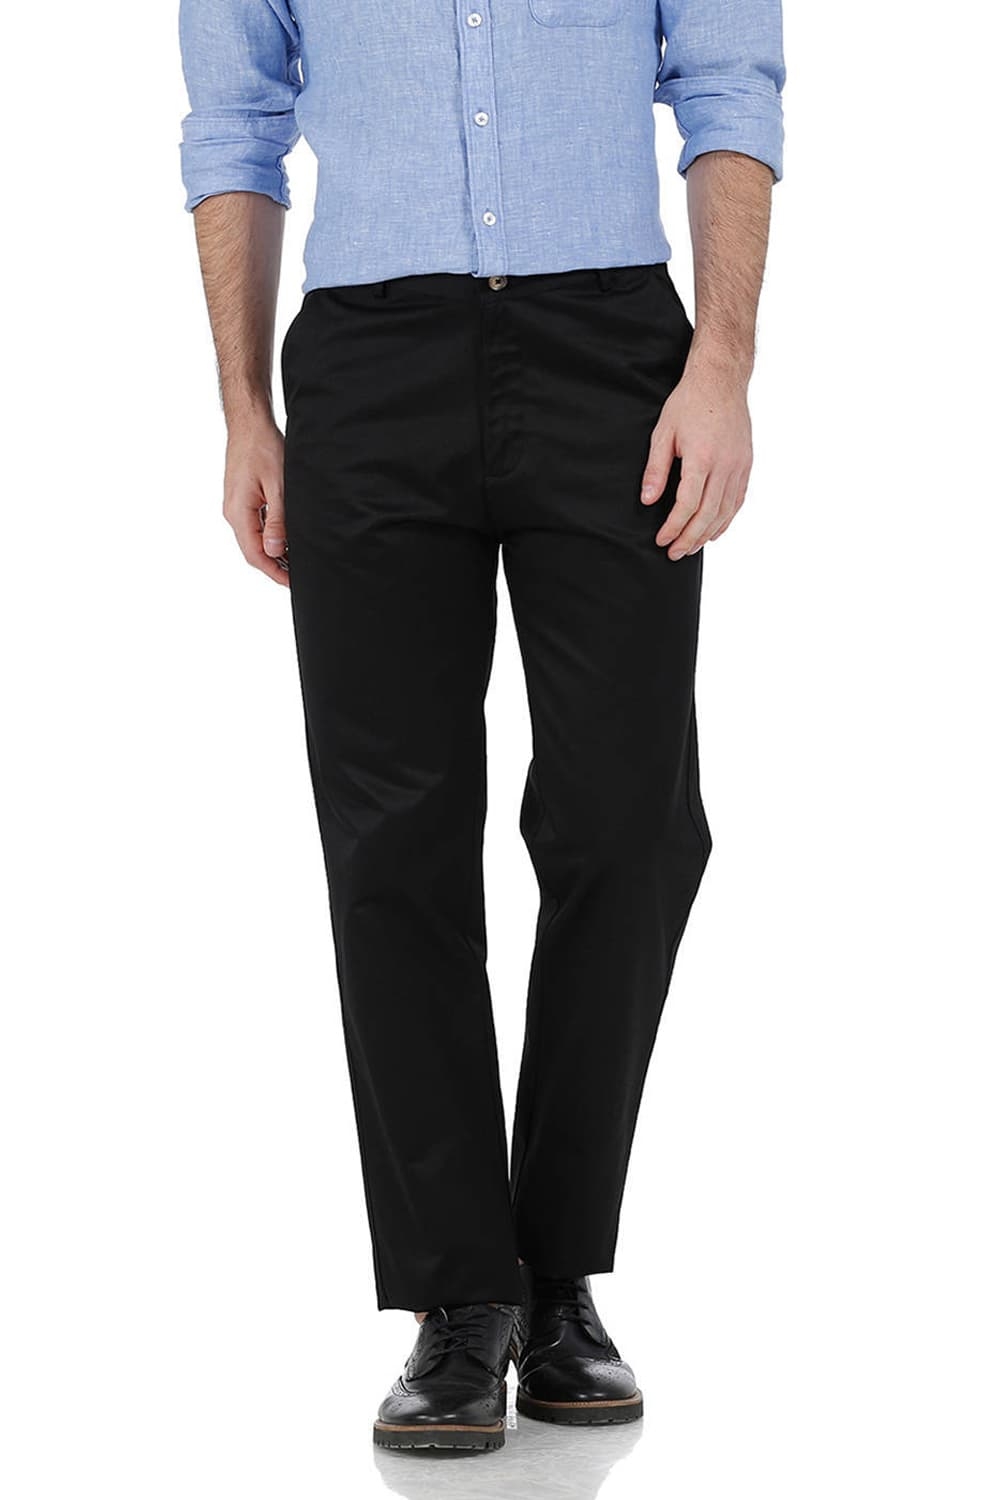 BASICS | Basics Comfort Fit Black Satin Weave Poly Cotton Trousers